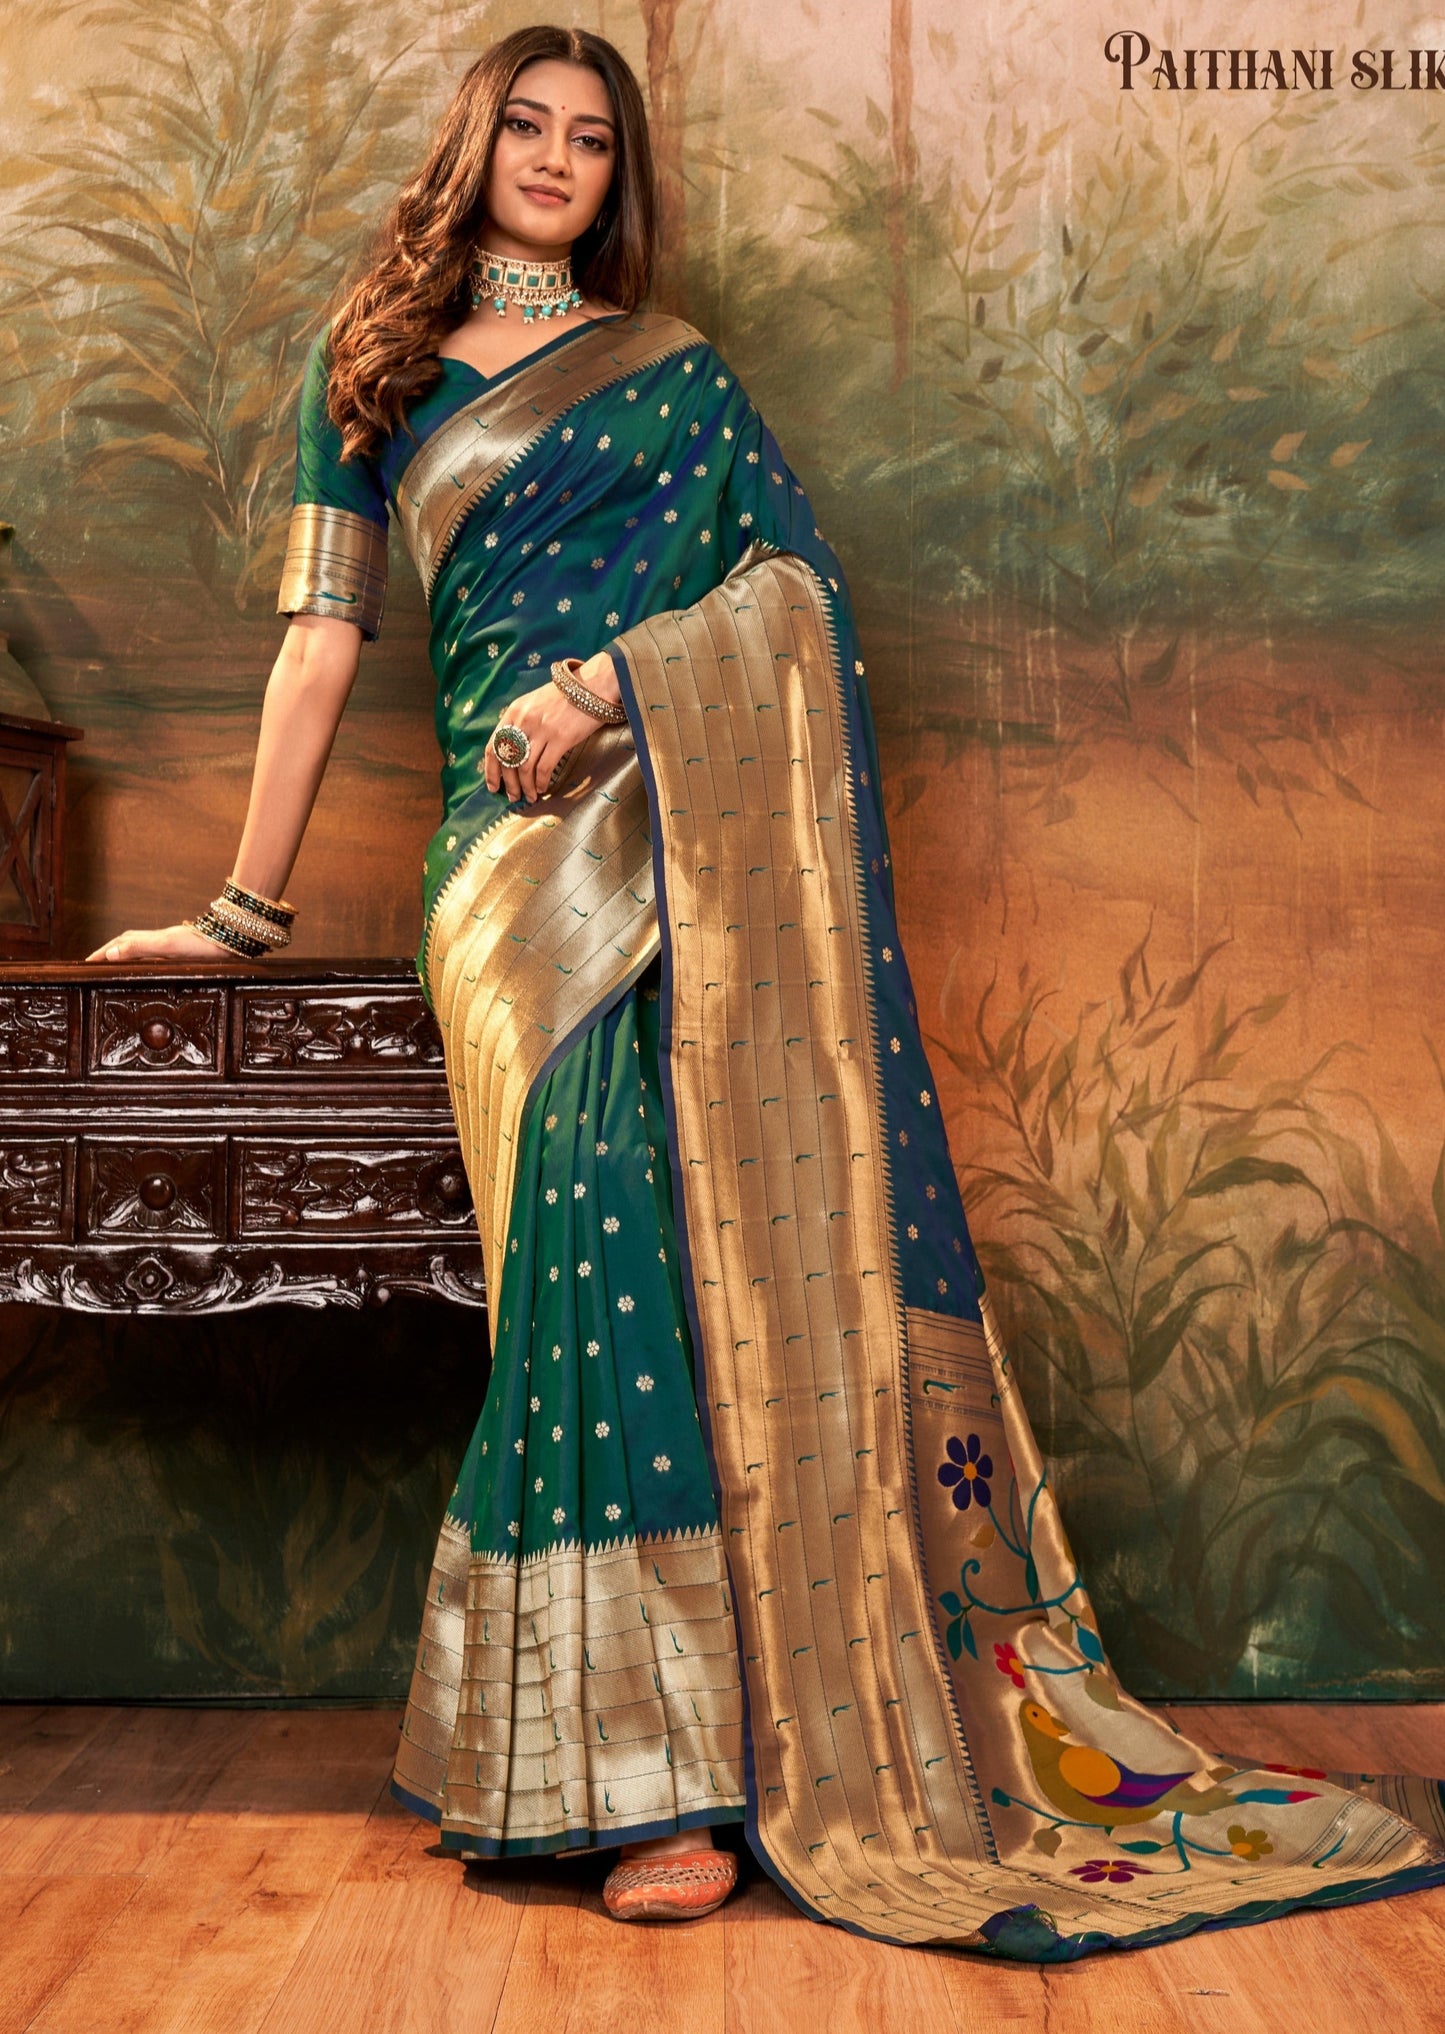 Paithani silk saree online in green colour.